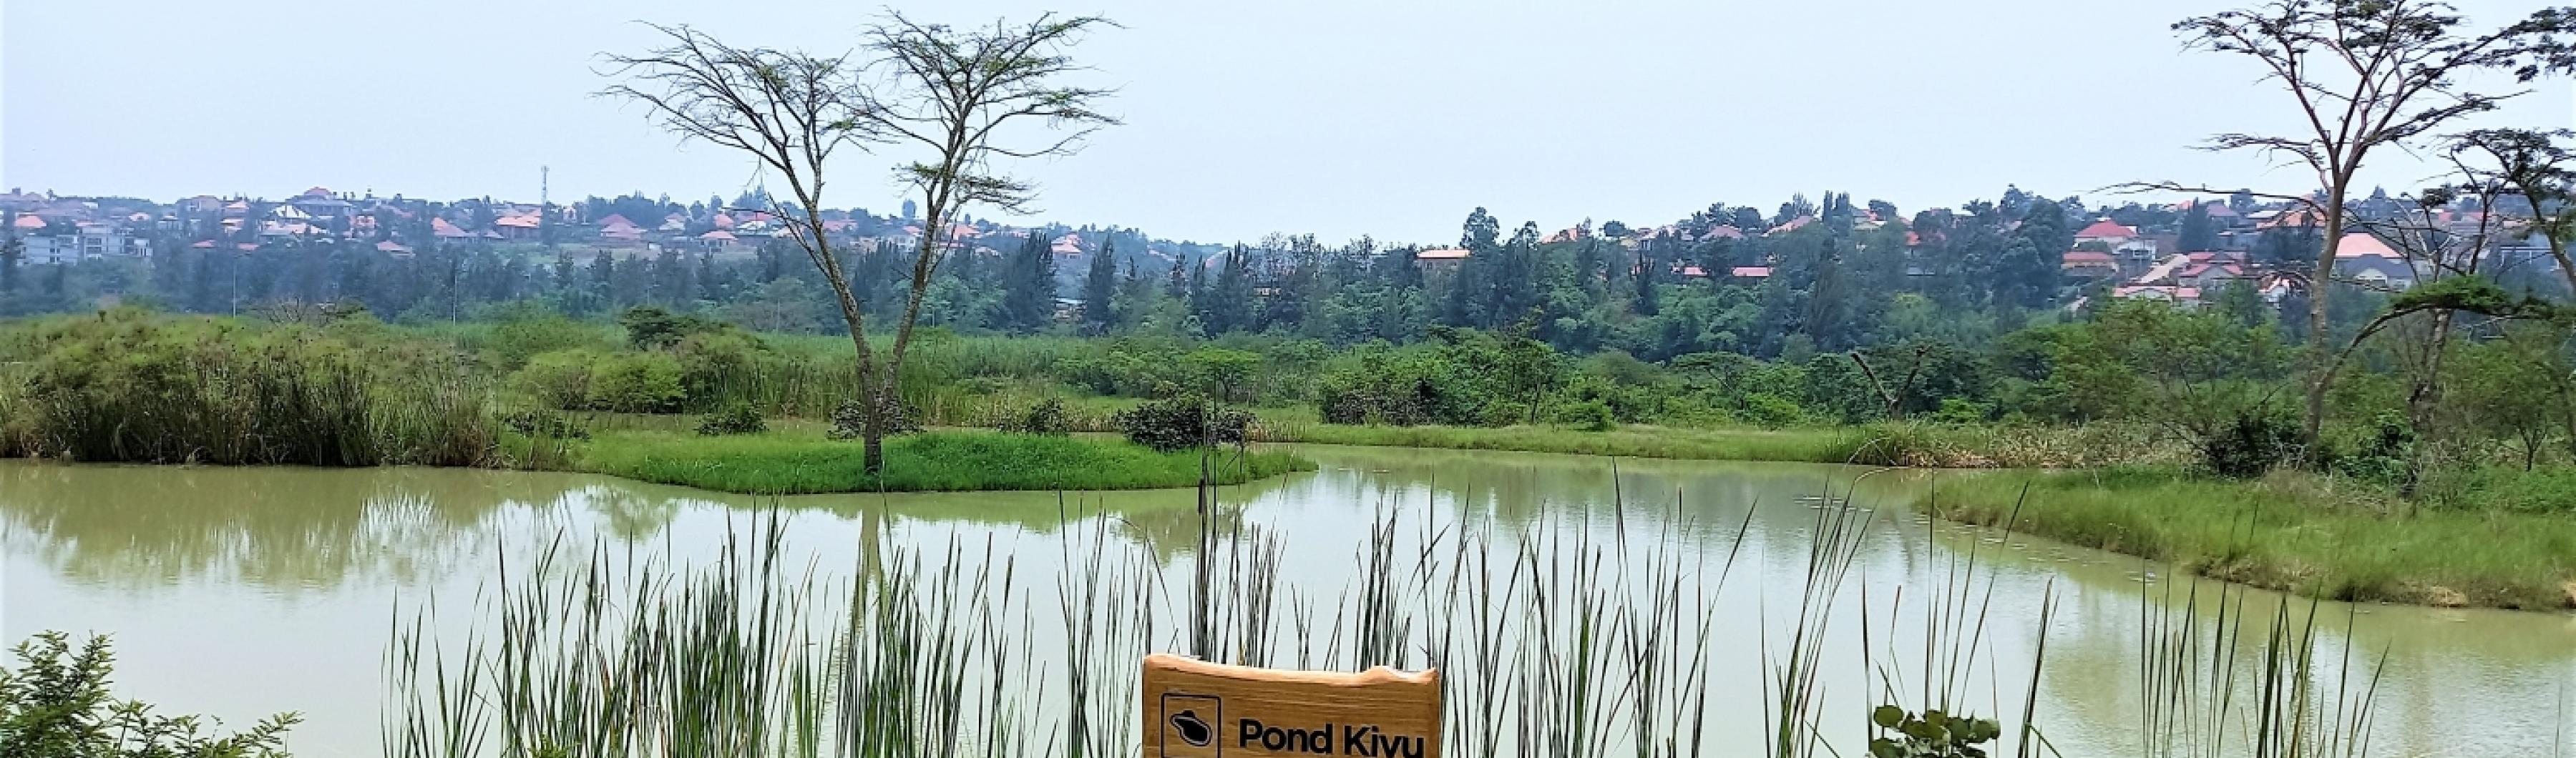 Kigali Nyandungu lahan basah rwanda